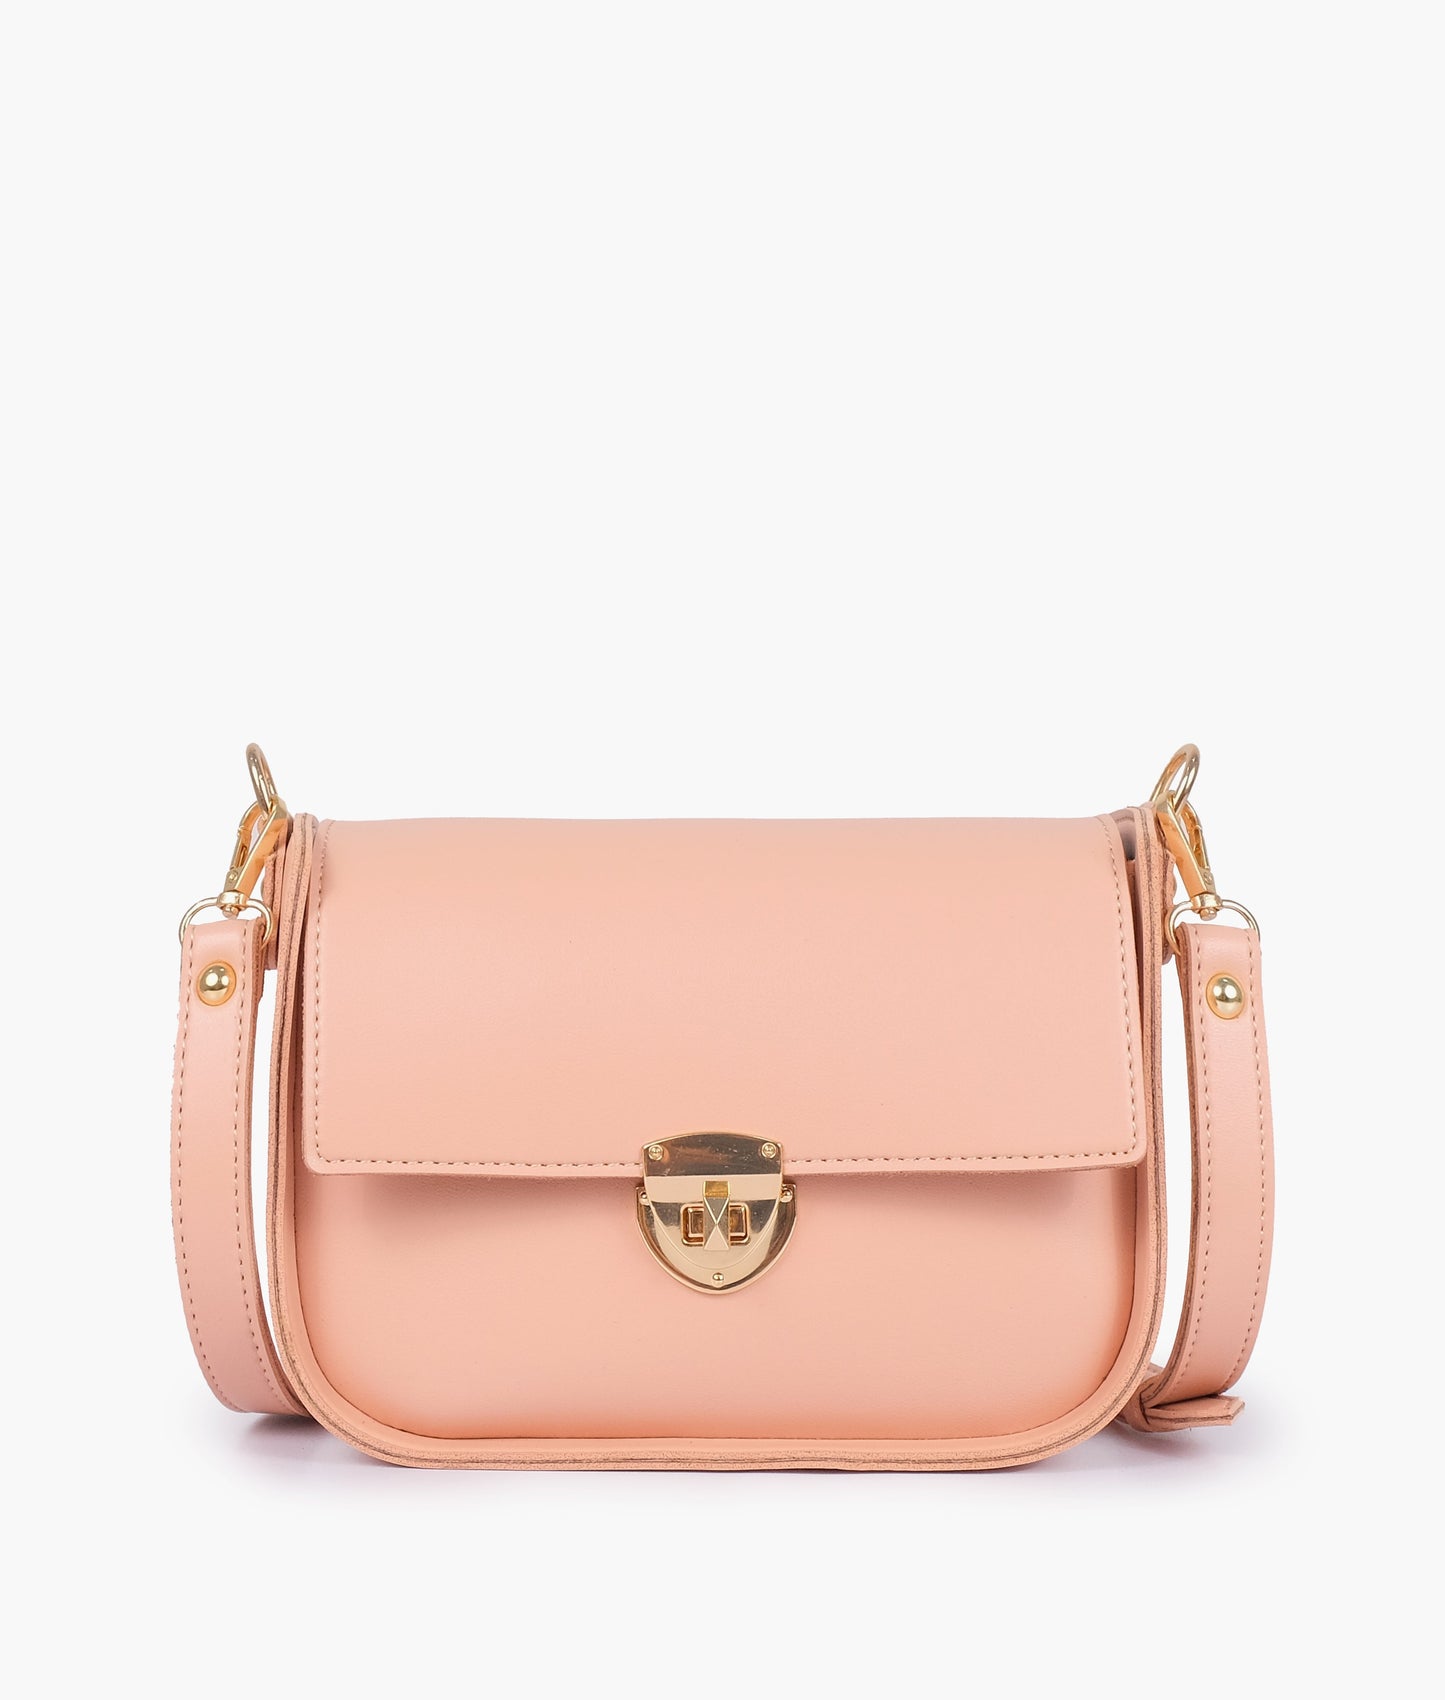 Pink Handbag For Women 4191